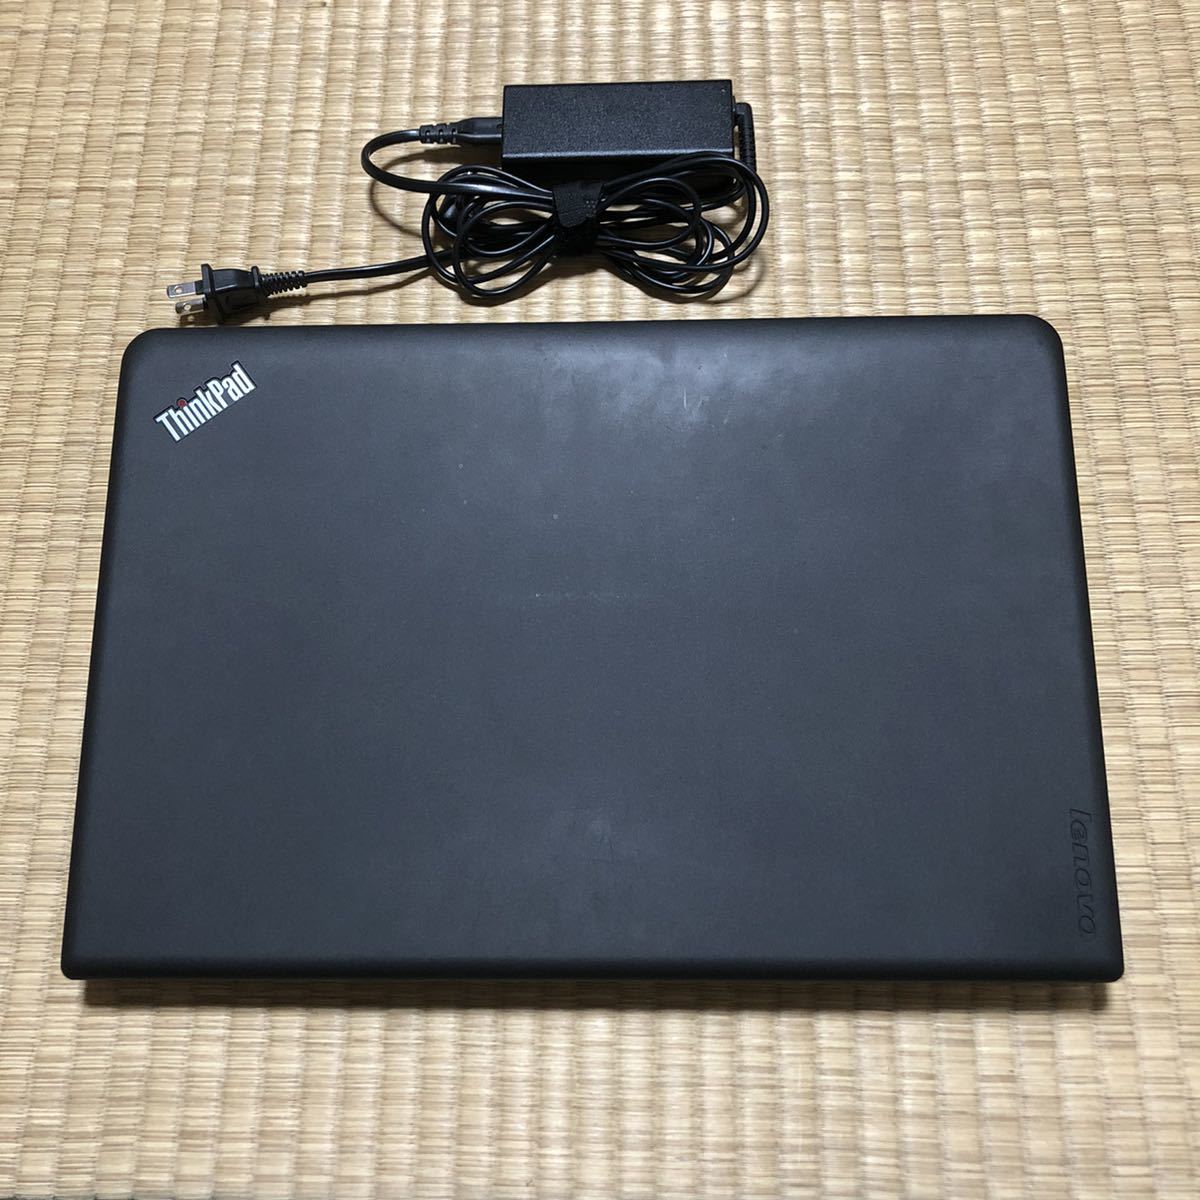 Lenovo ThinkPad E560 i7 6500U メモリ12GB 高速SSD 480GB 15.6インチFHD画面 wins10/オフィス_画像8